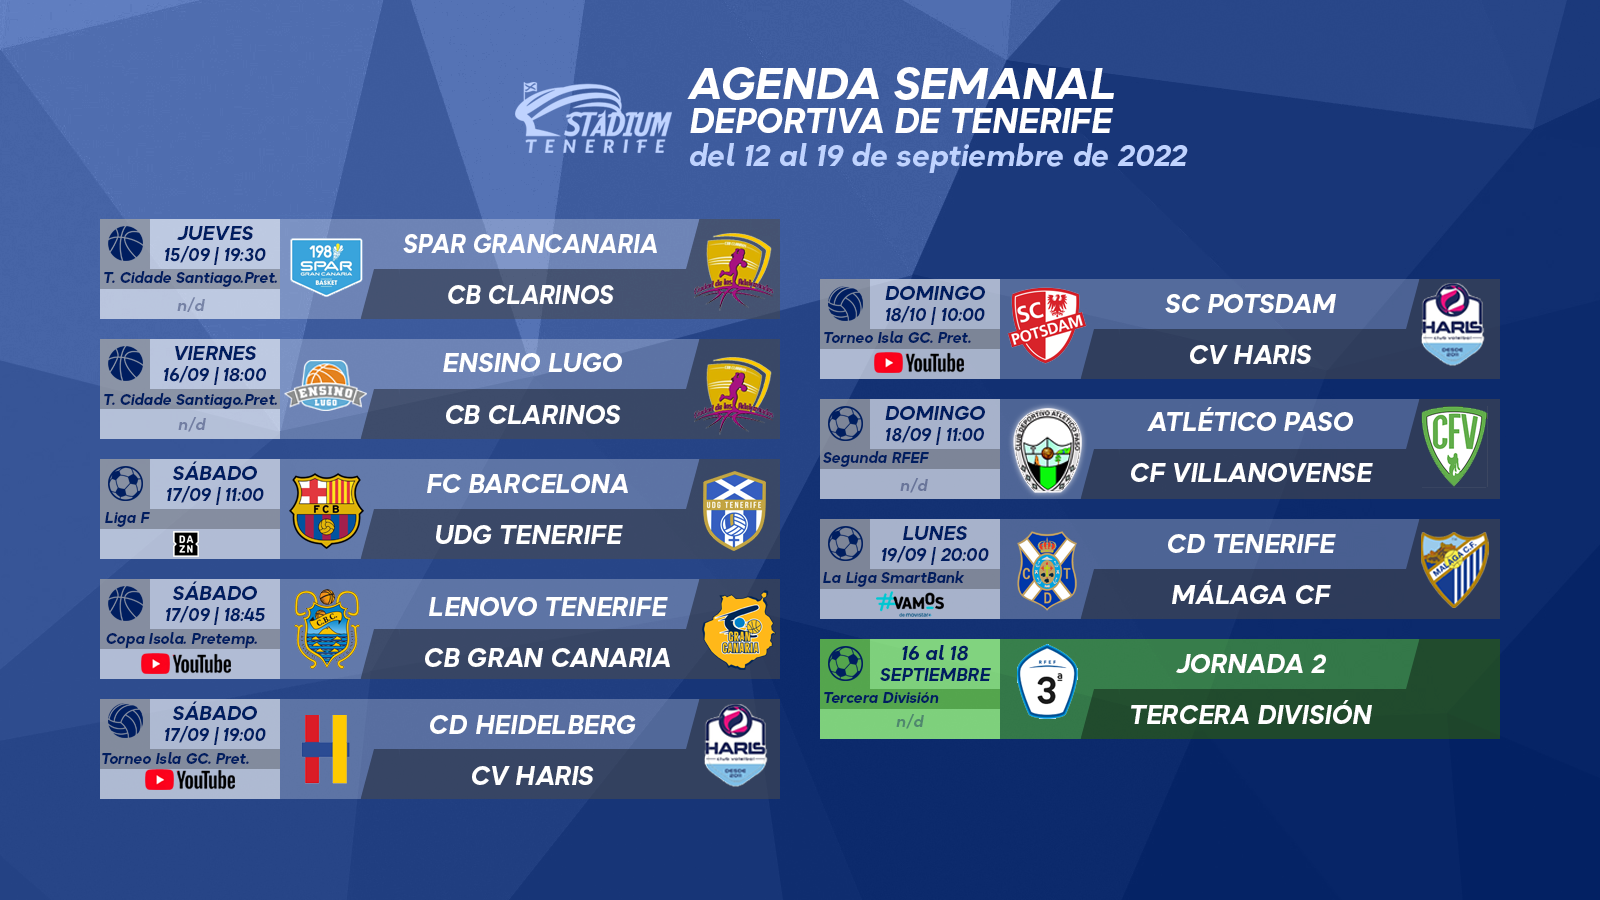 Agenda Semanal Deportiva de Tenerife (12 al 19 de septiembre de 2022)